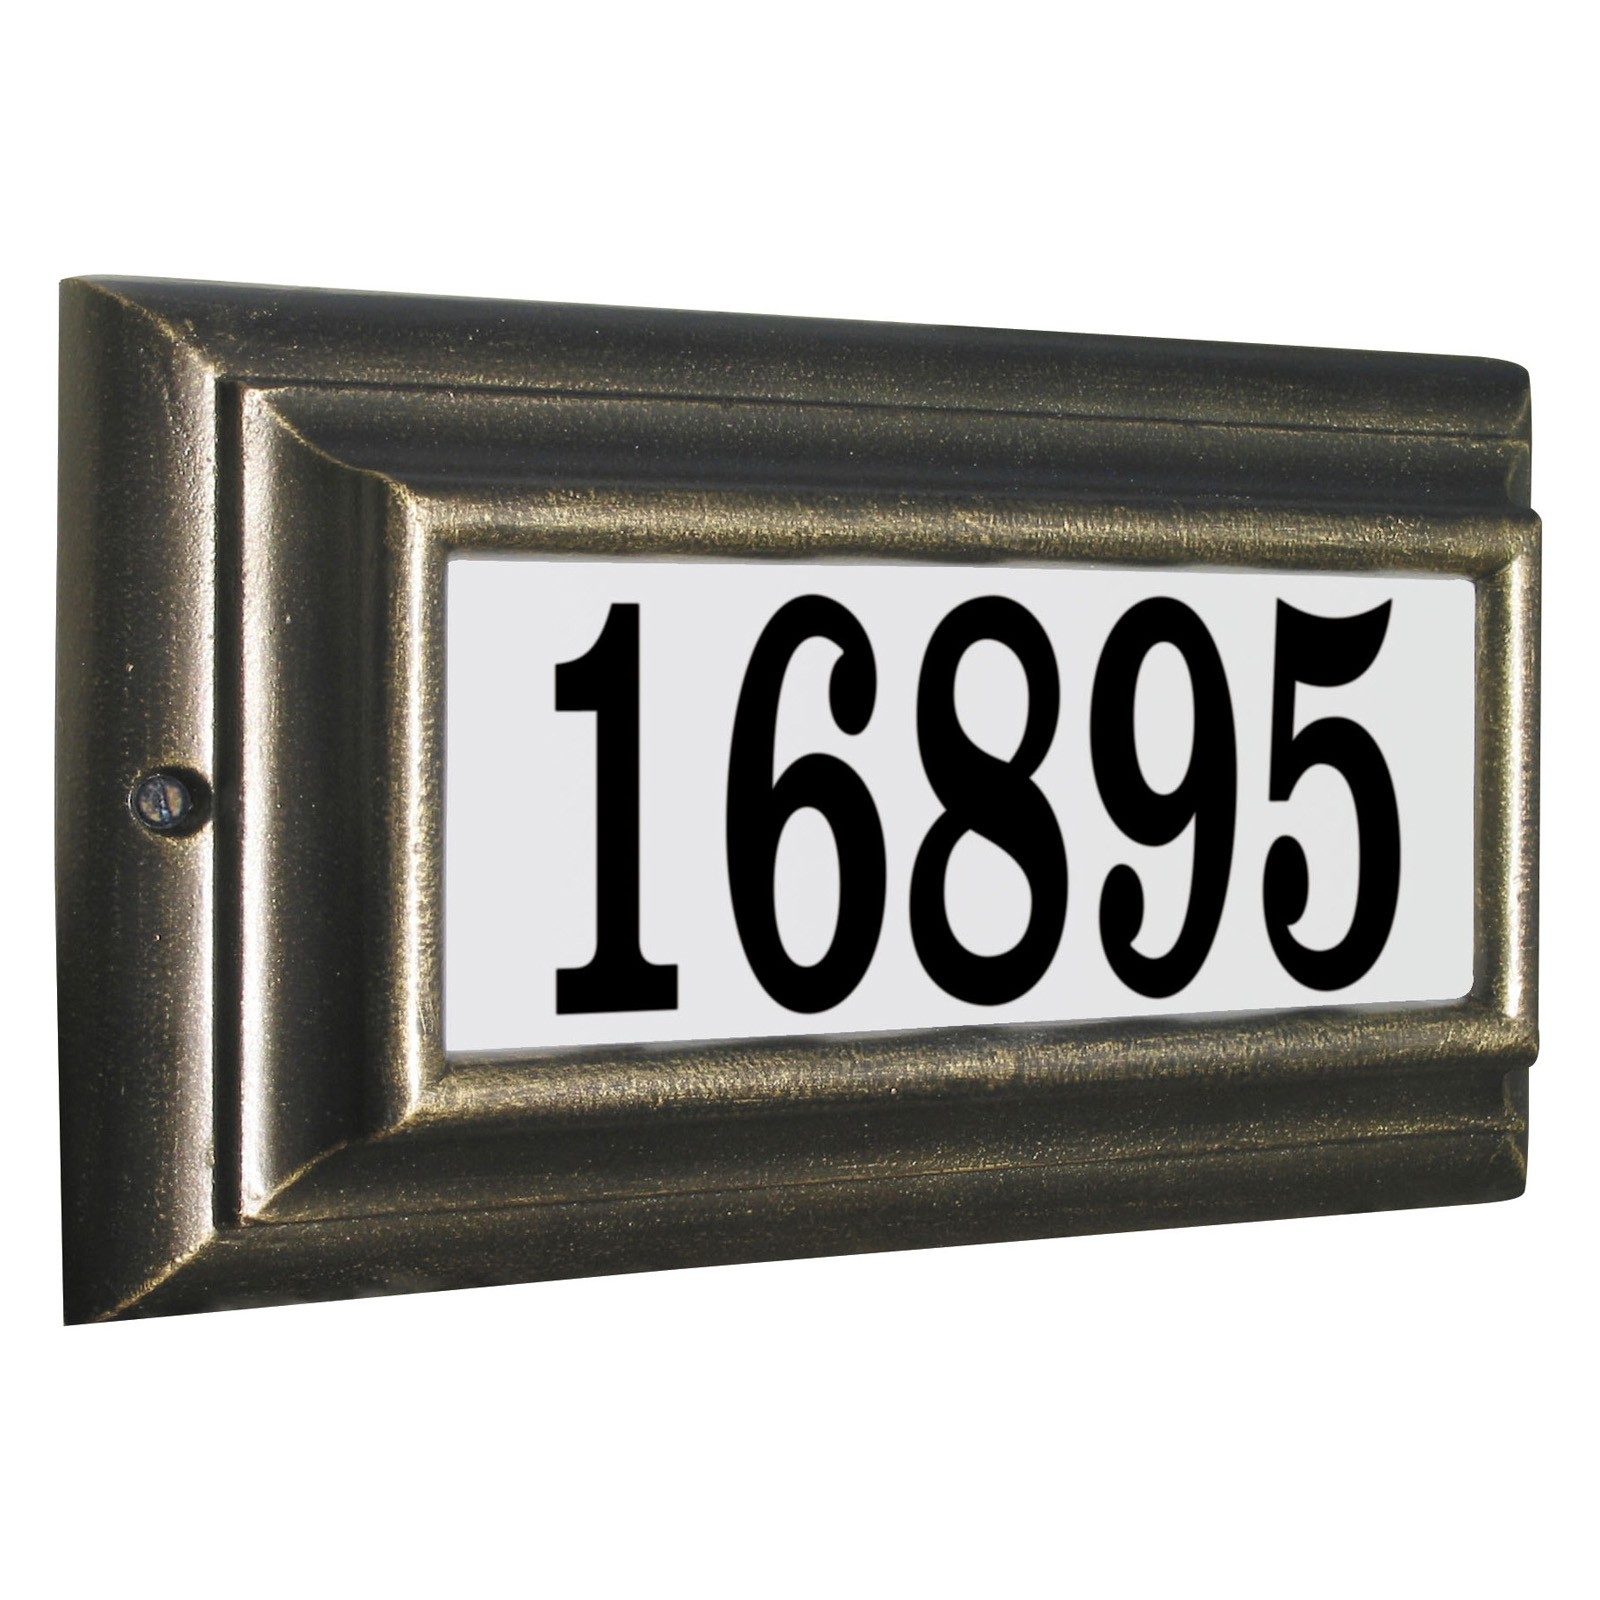 Qualarc edgewood standard lighted address plaque address